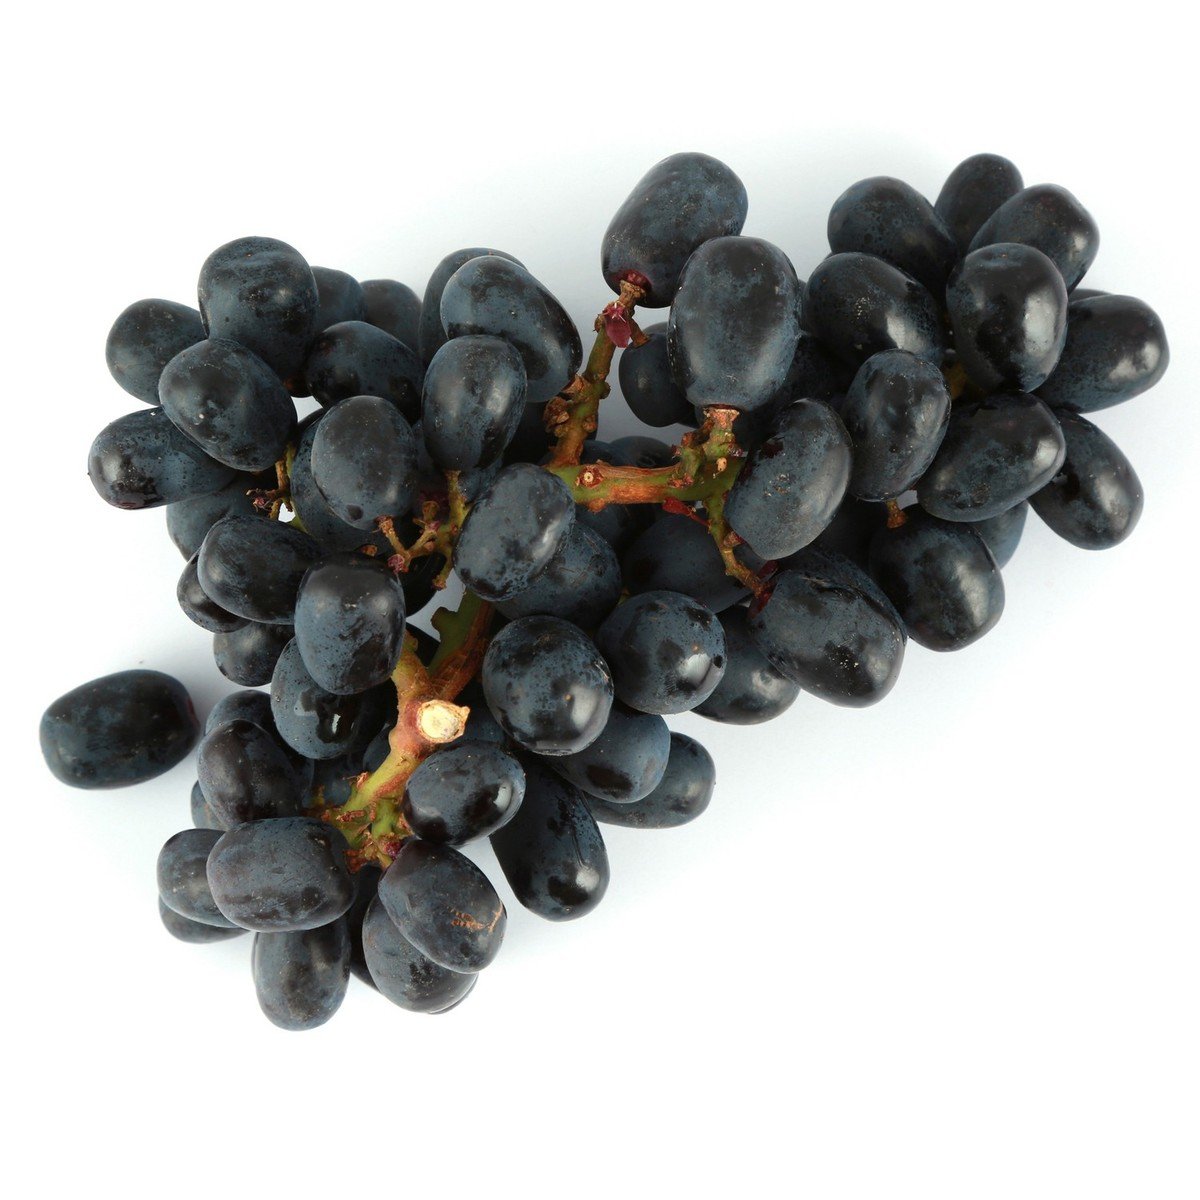 Grapes Black India 500 g